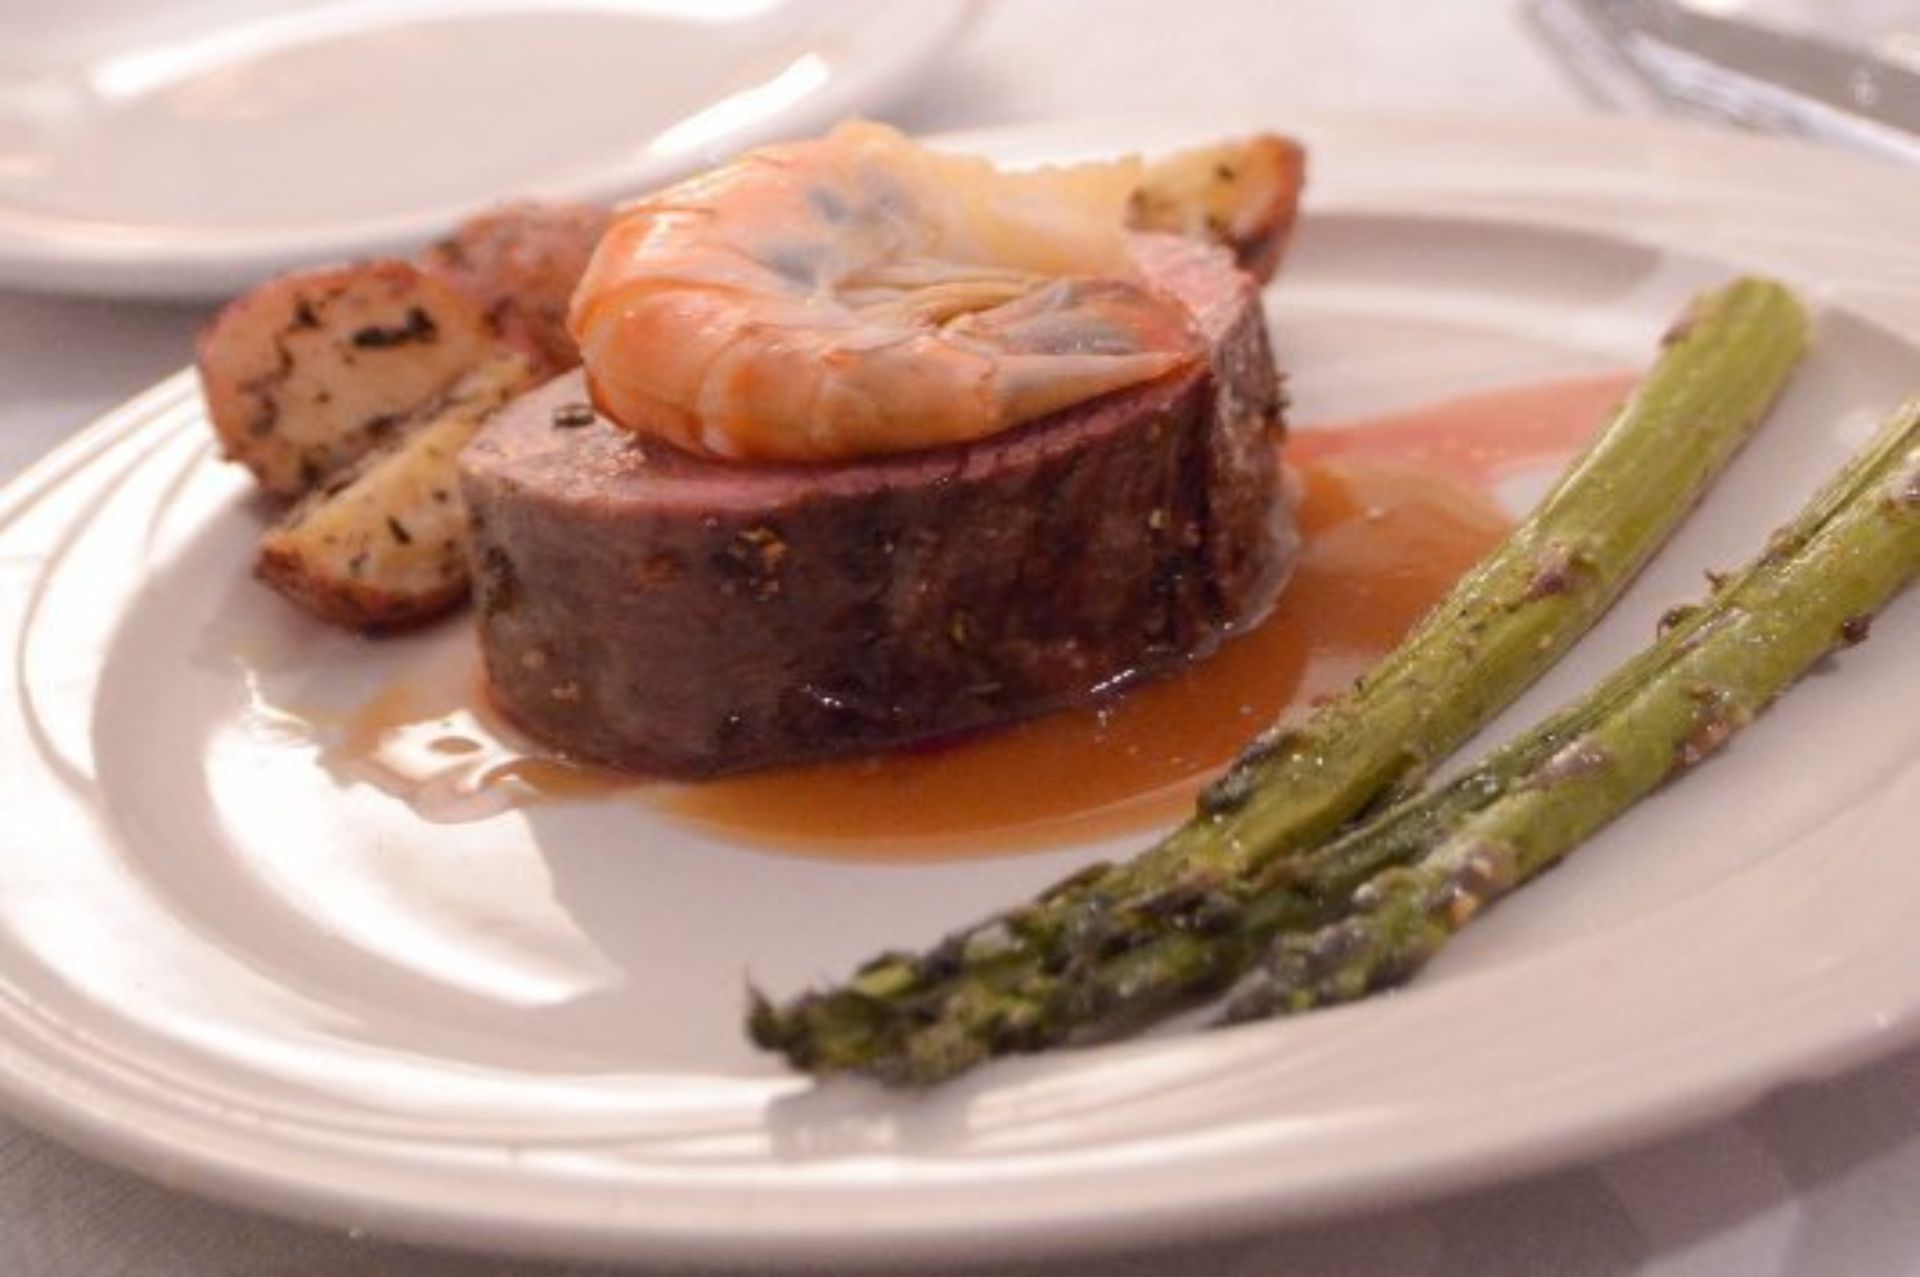 Slab Of Steak With Shrimp and Asparagus